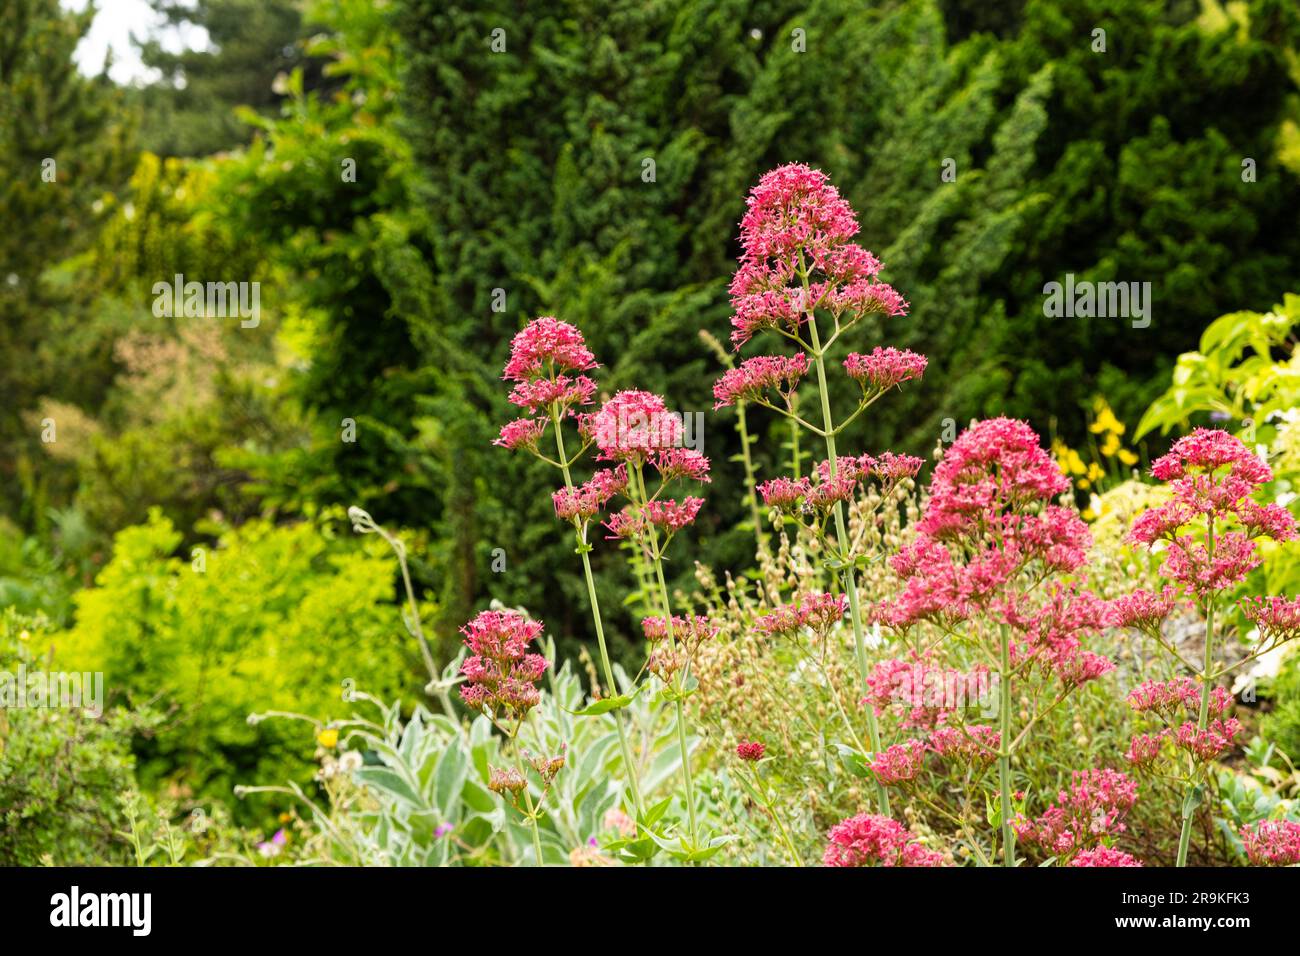 Centranthus flowers in the botanical garden, a member of the Valerian family. Stock Photo